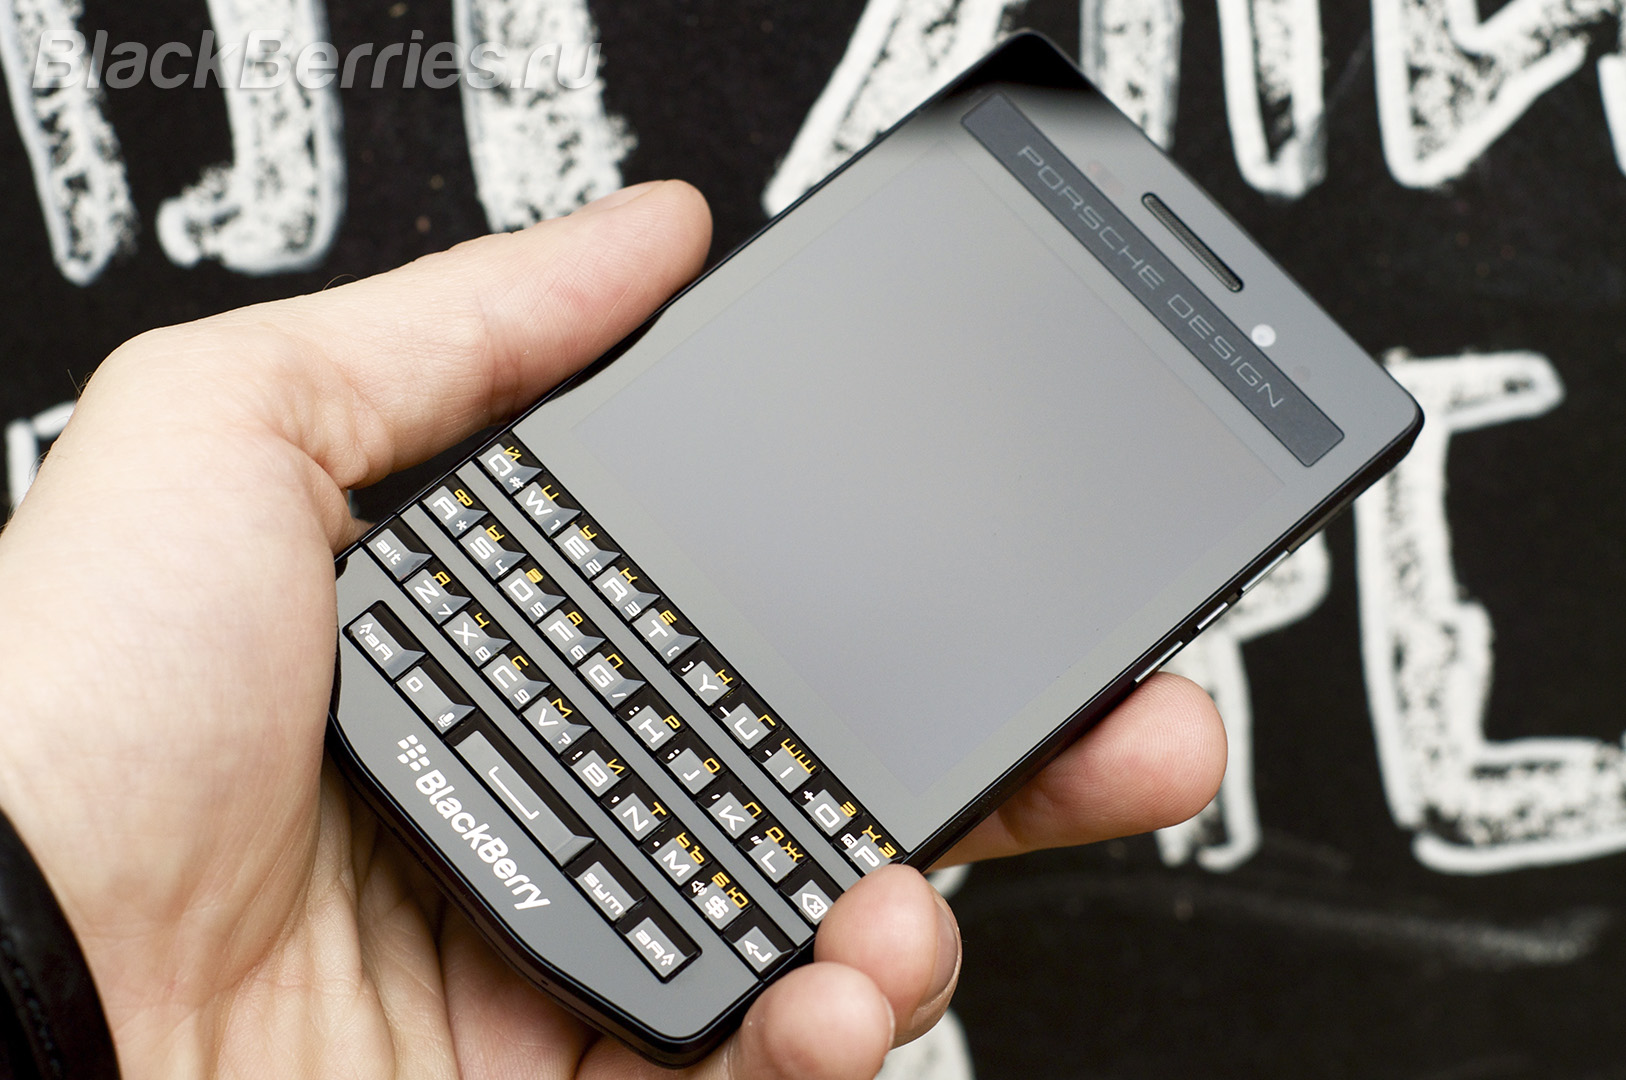 BlackBerry-P9983-Graphite-RUS-7